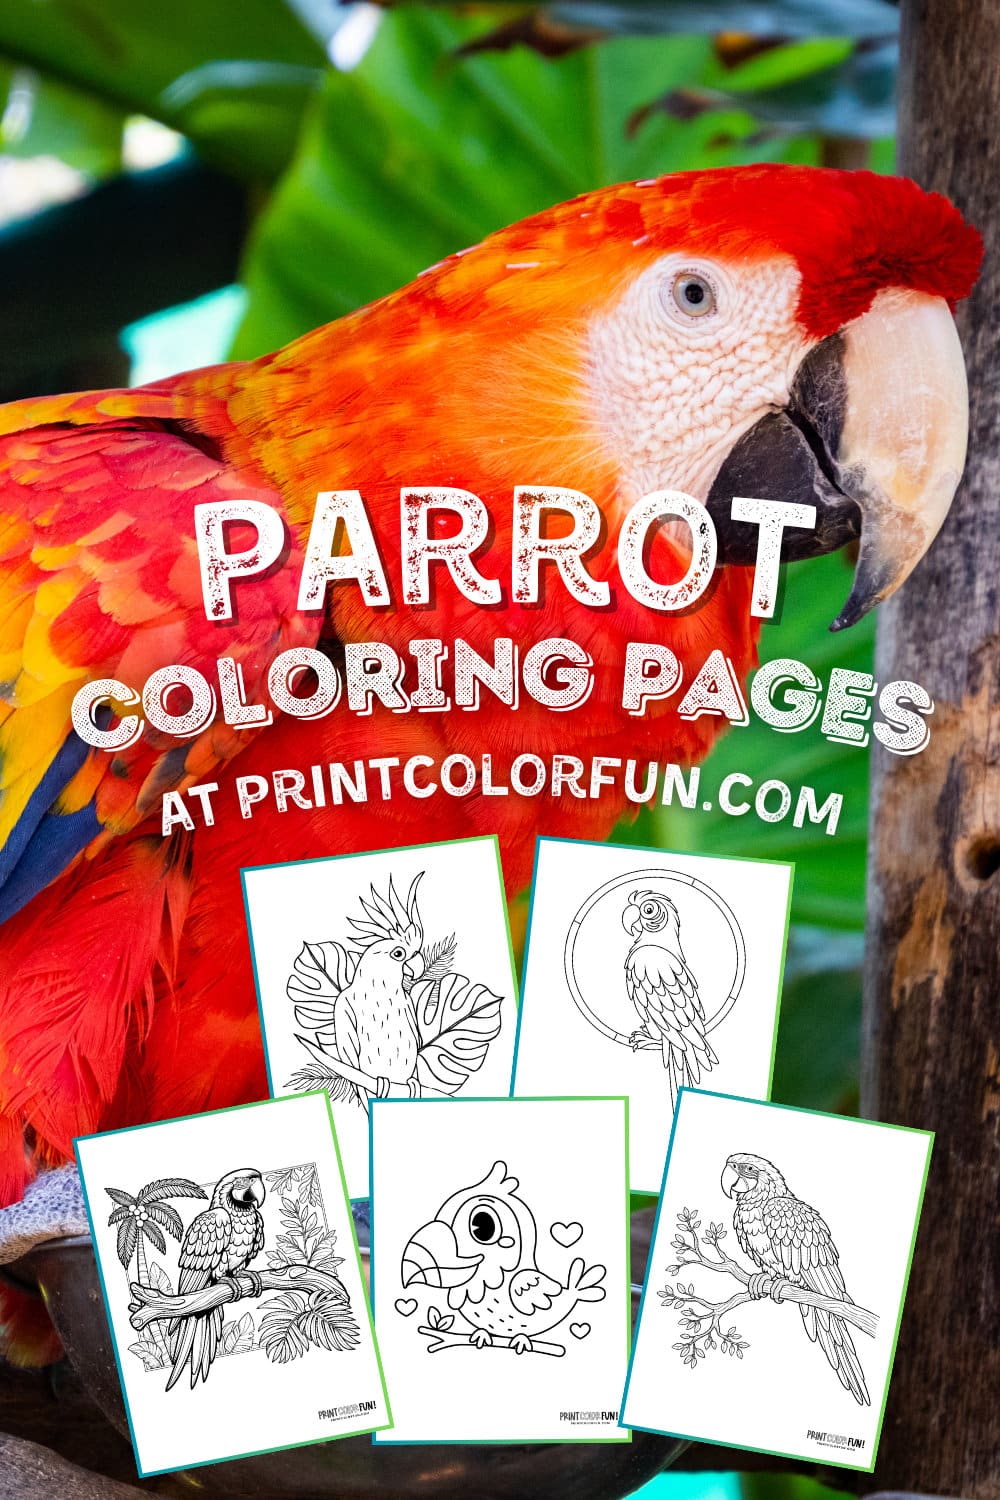 Parrot coloring pages at PrintColorFun com